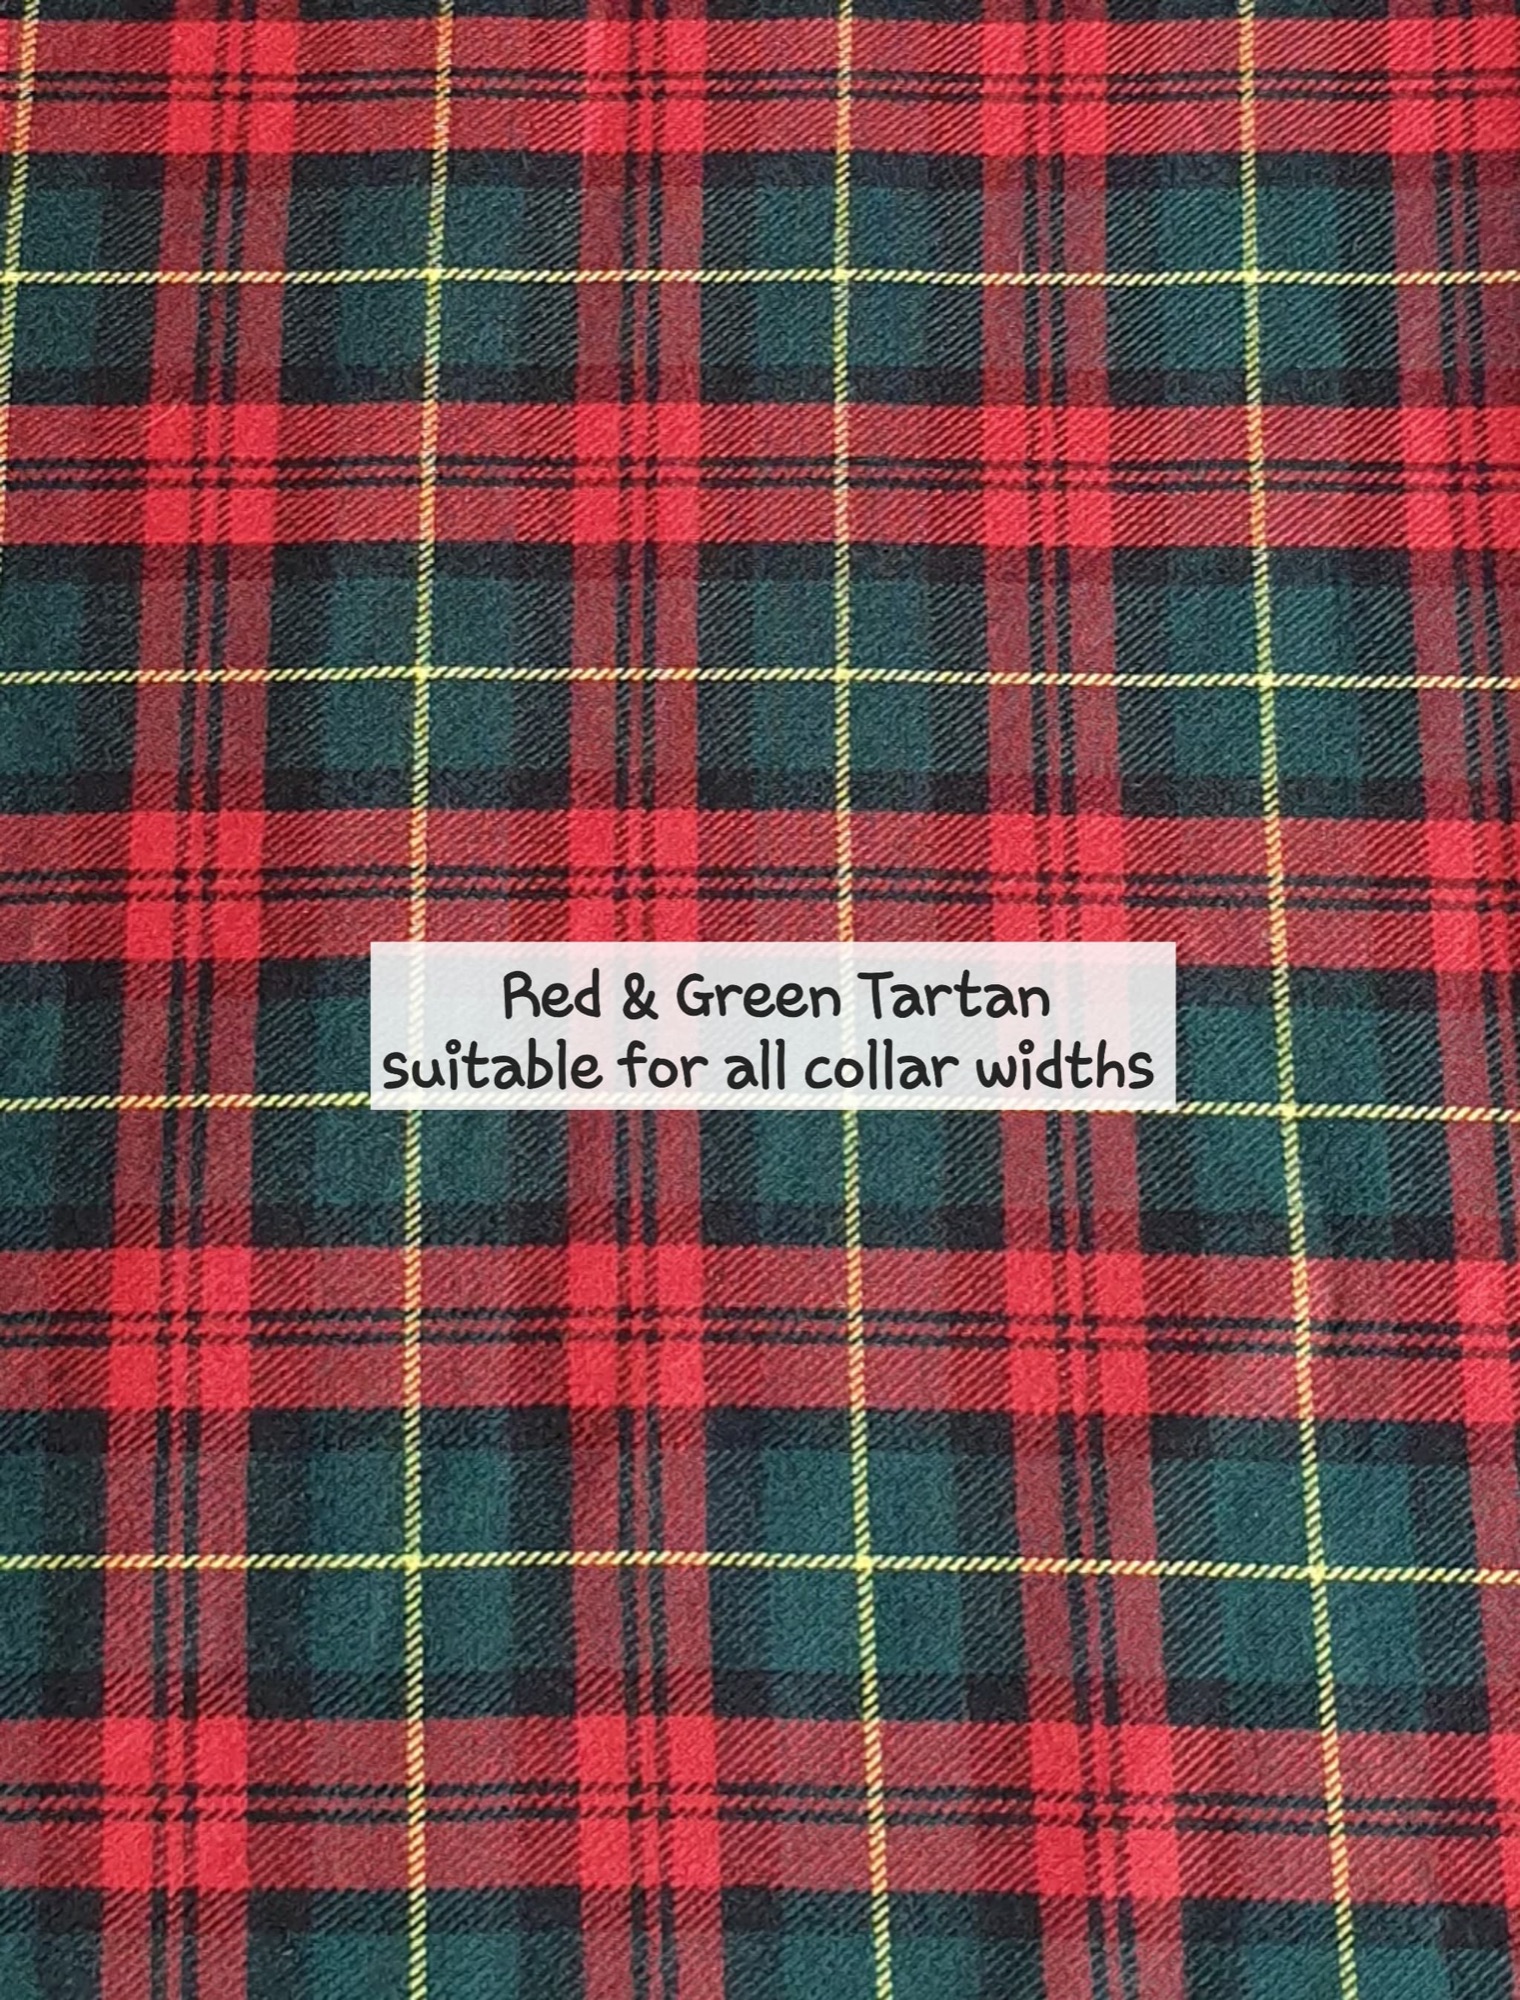 Red & Green Tartan